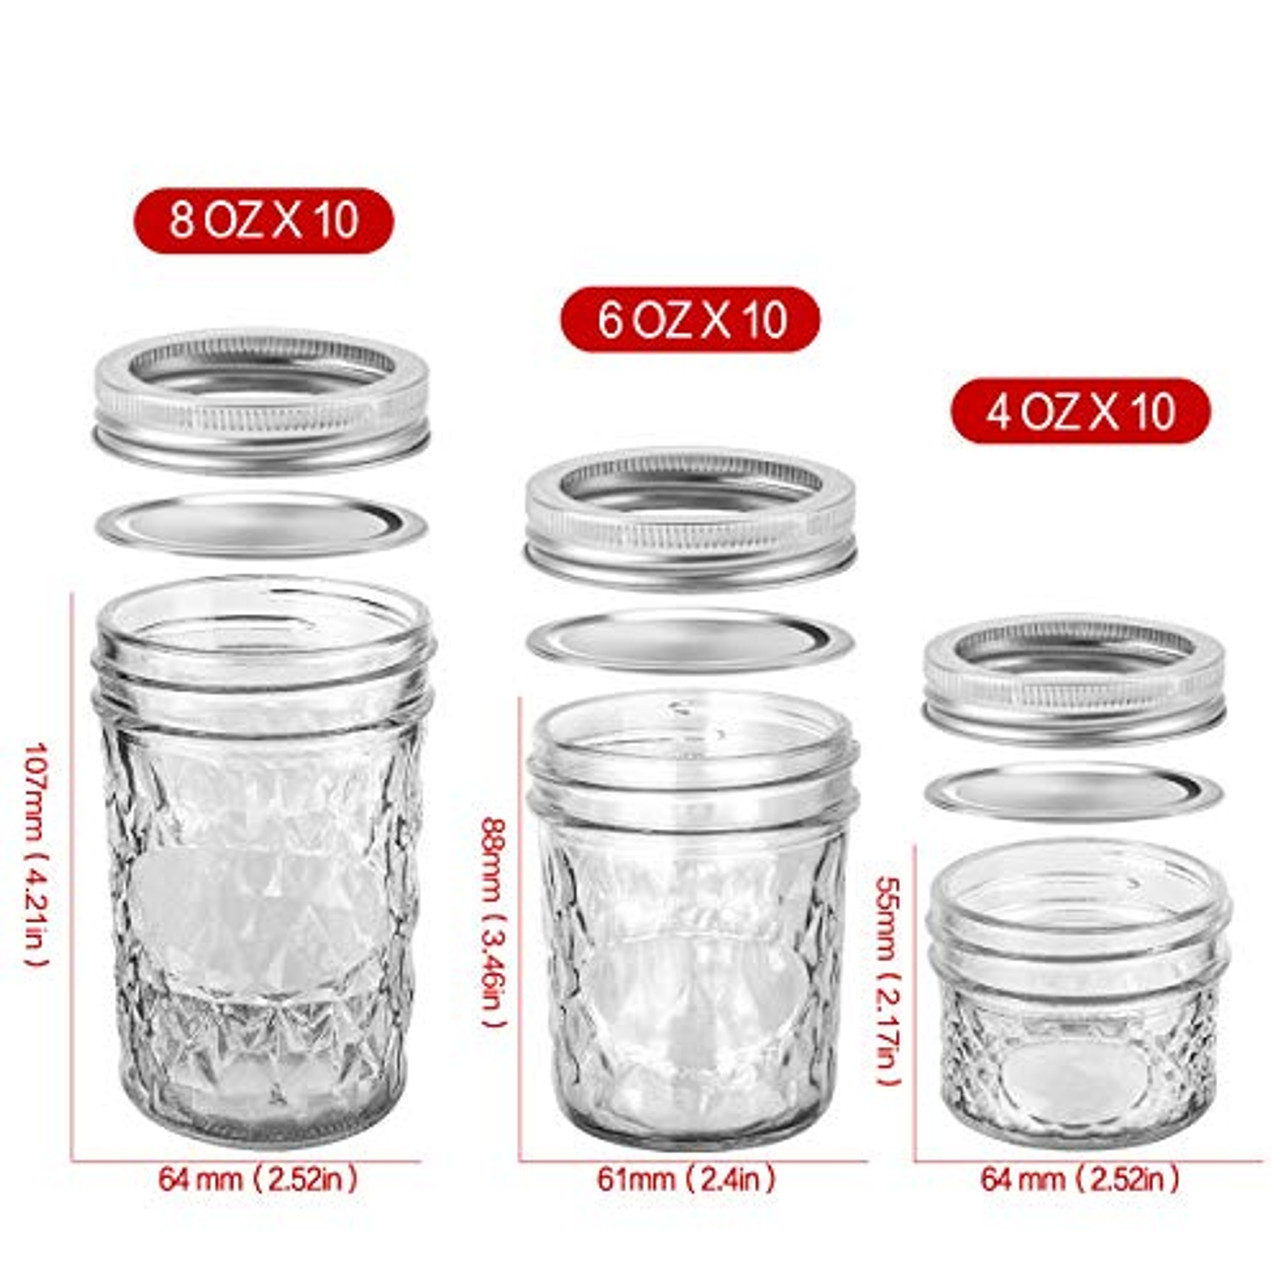 Mason Jars Canning Jars, Jelly Jars With Regular Lids,Magnetic Spice Jars,  4 OZ x 10